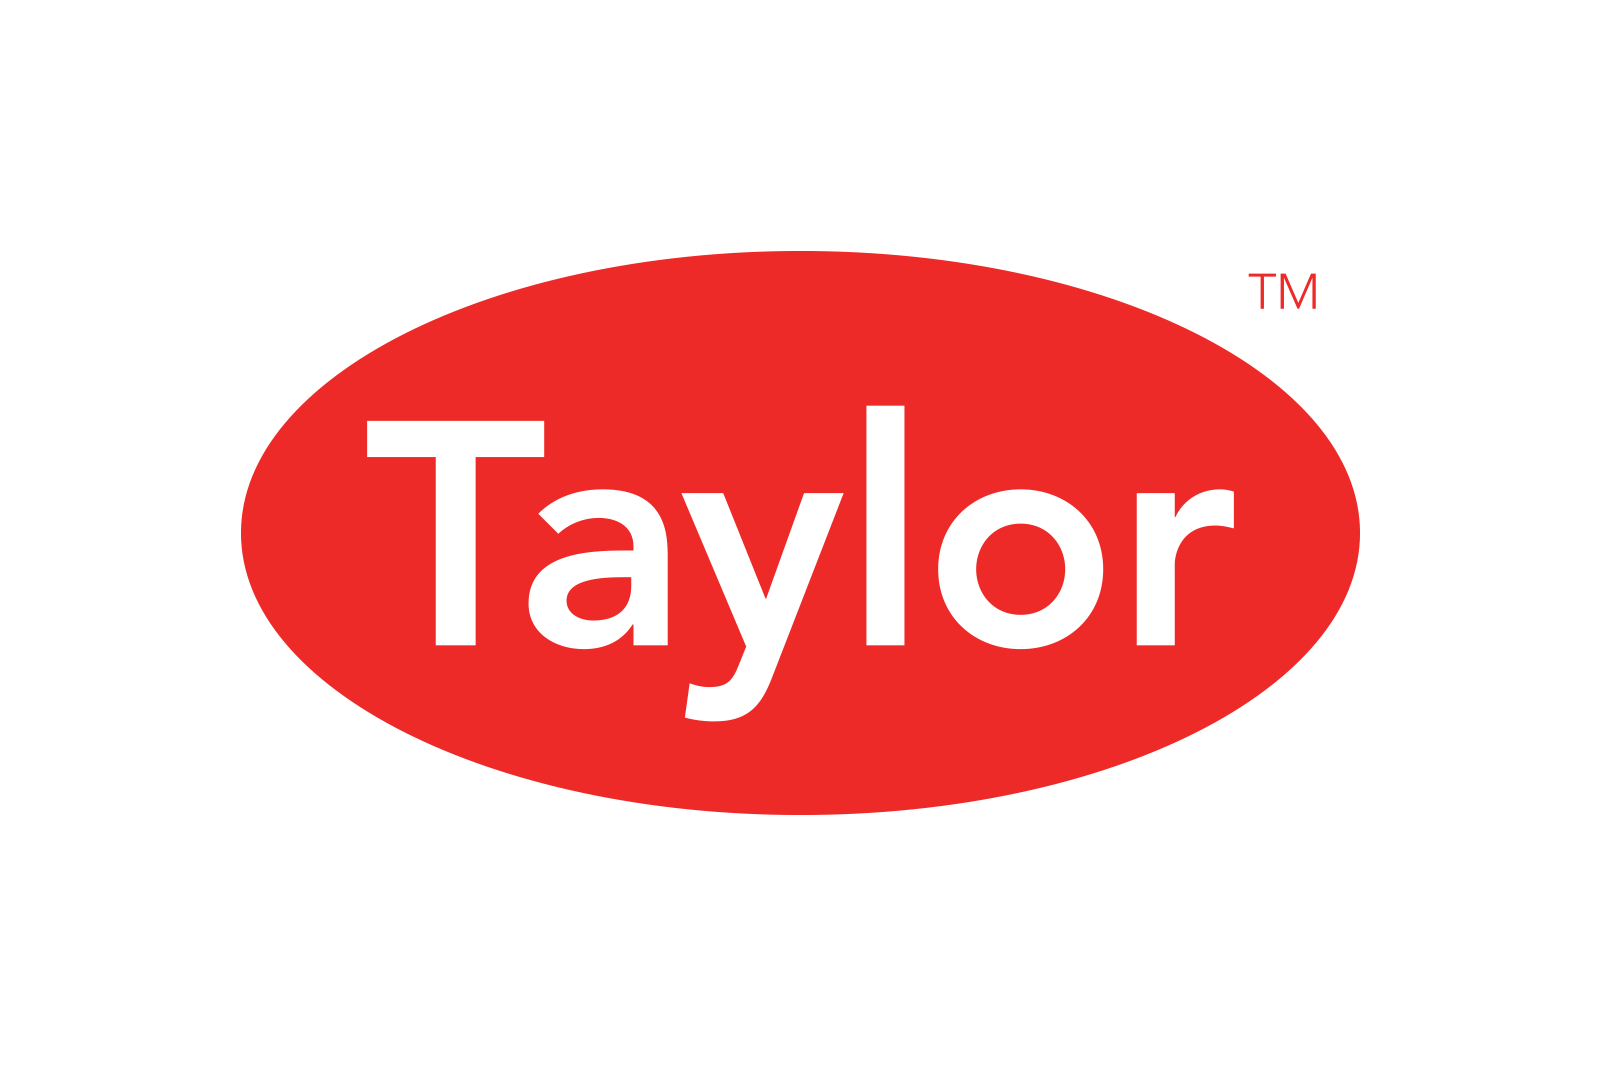 The Taylor Logo - Taylor